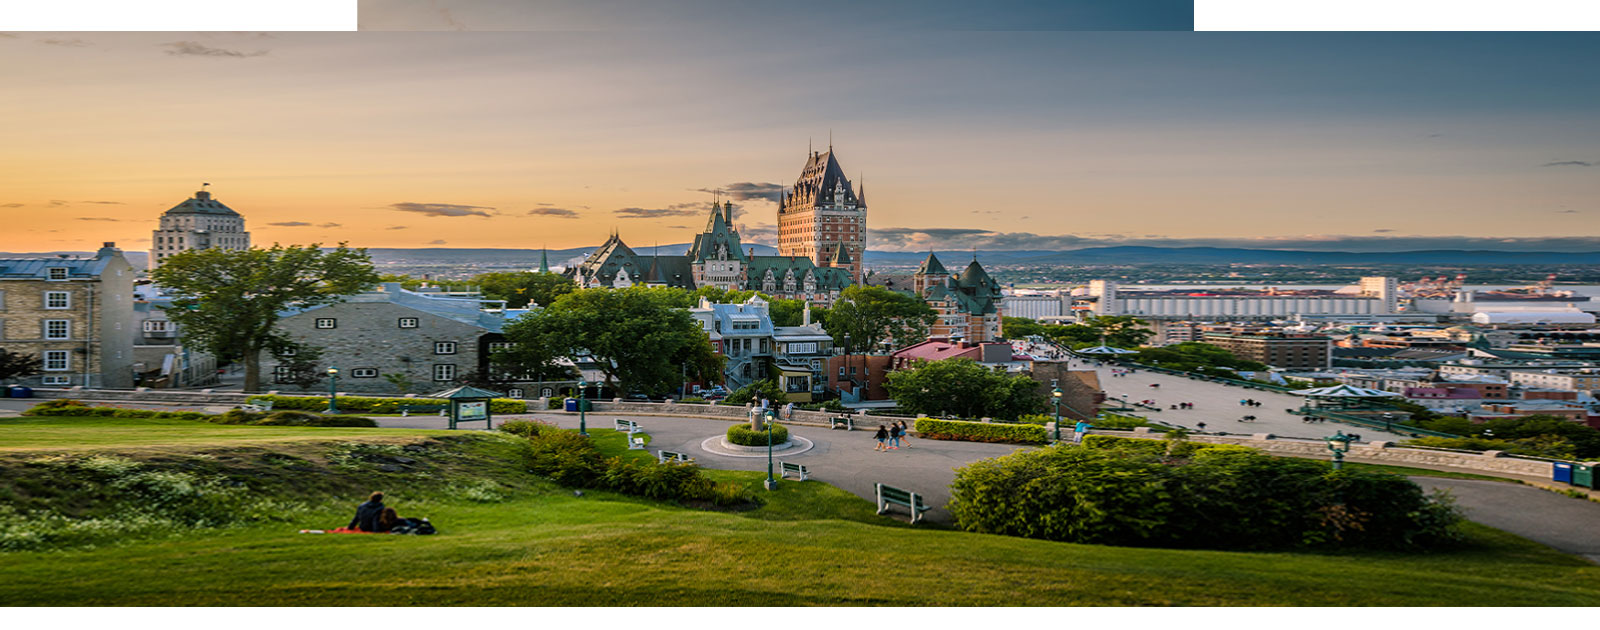 Picture of Quebec's Parliament building.